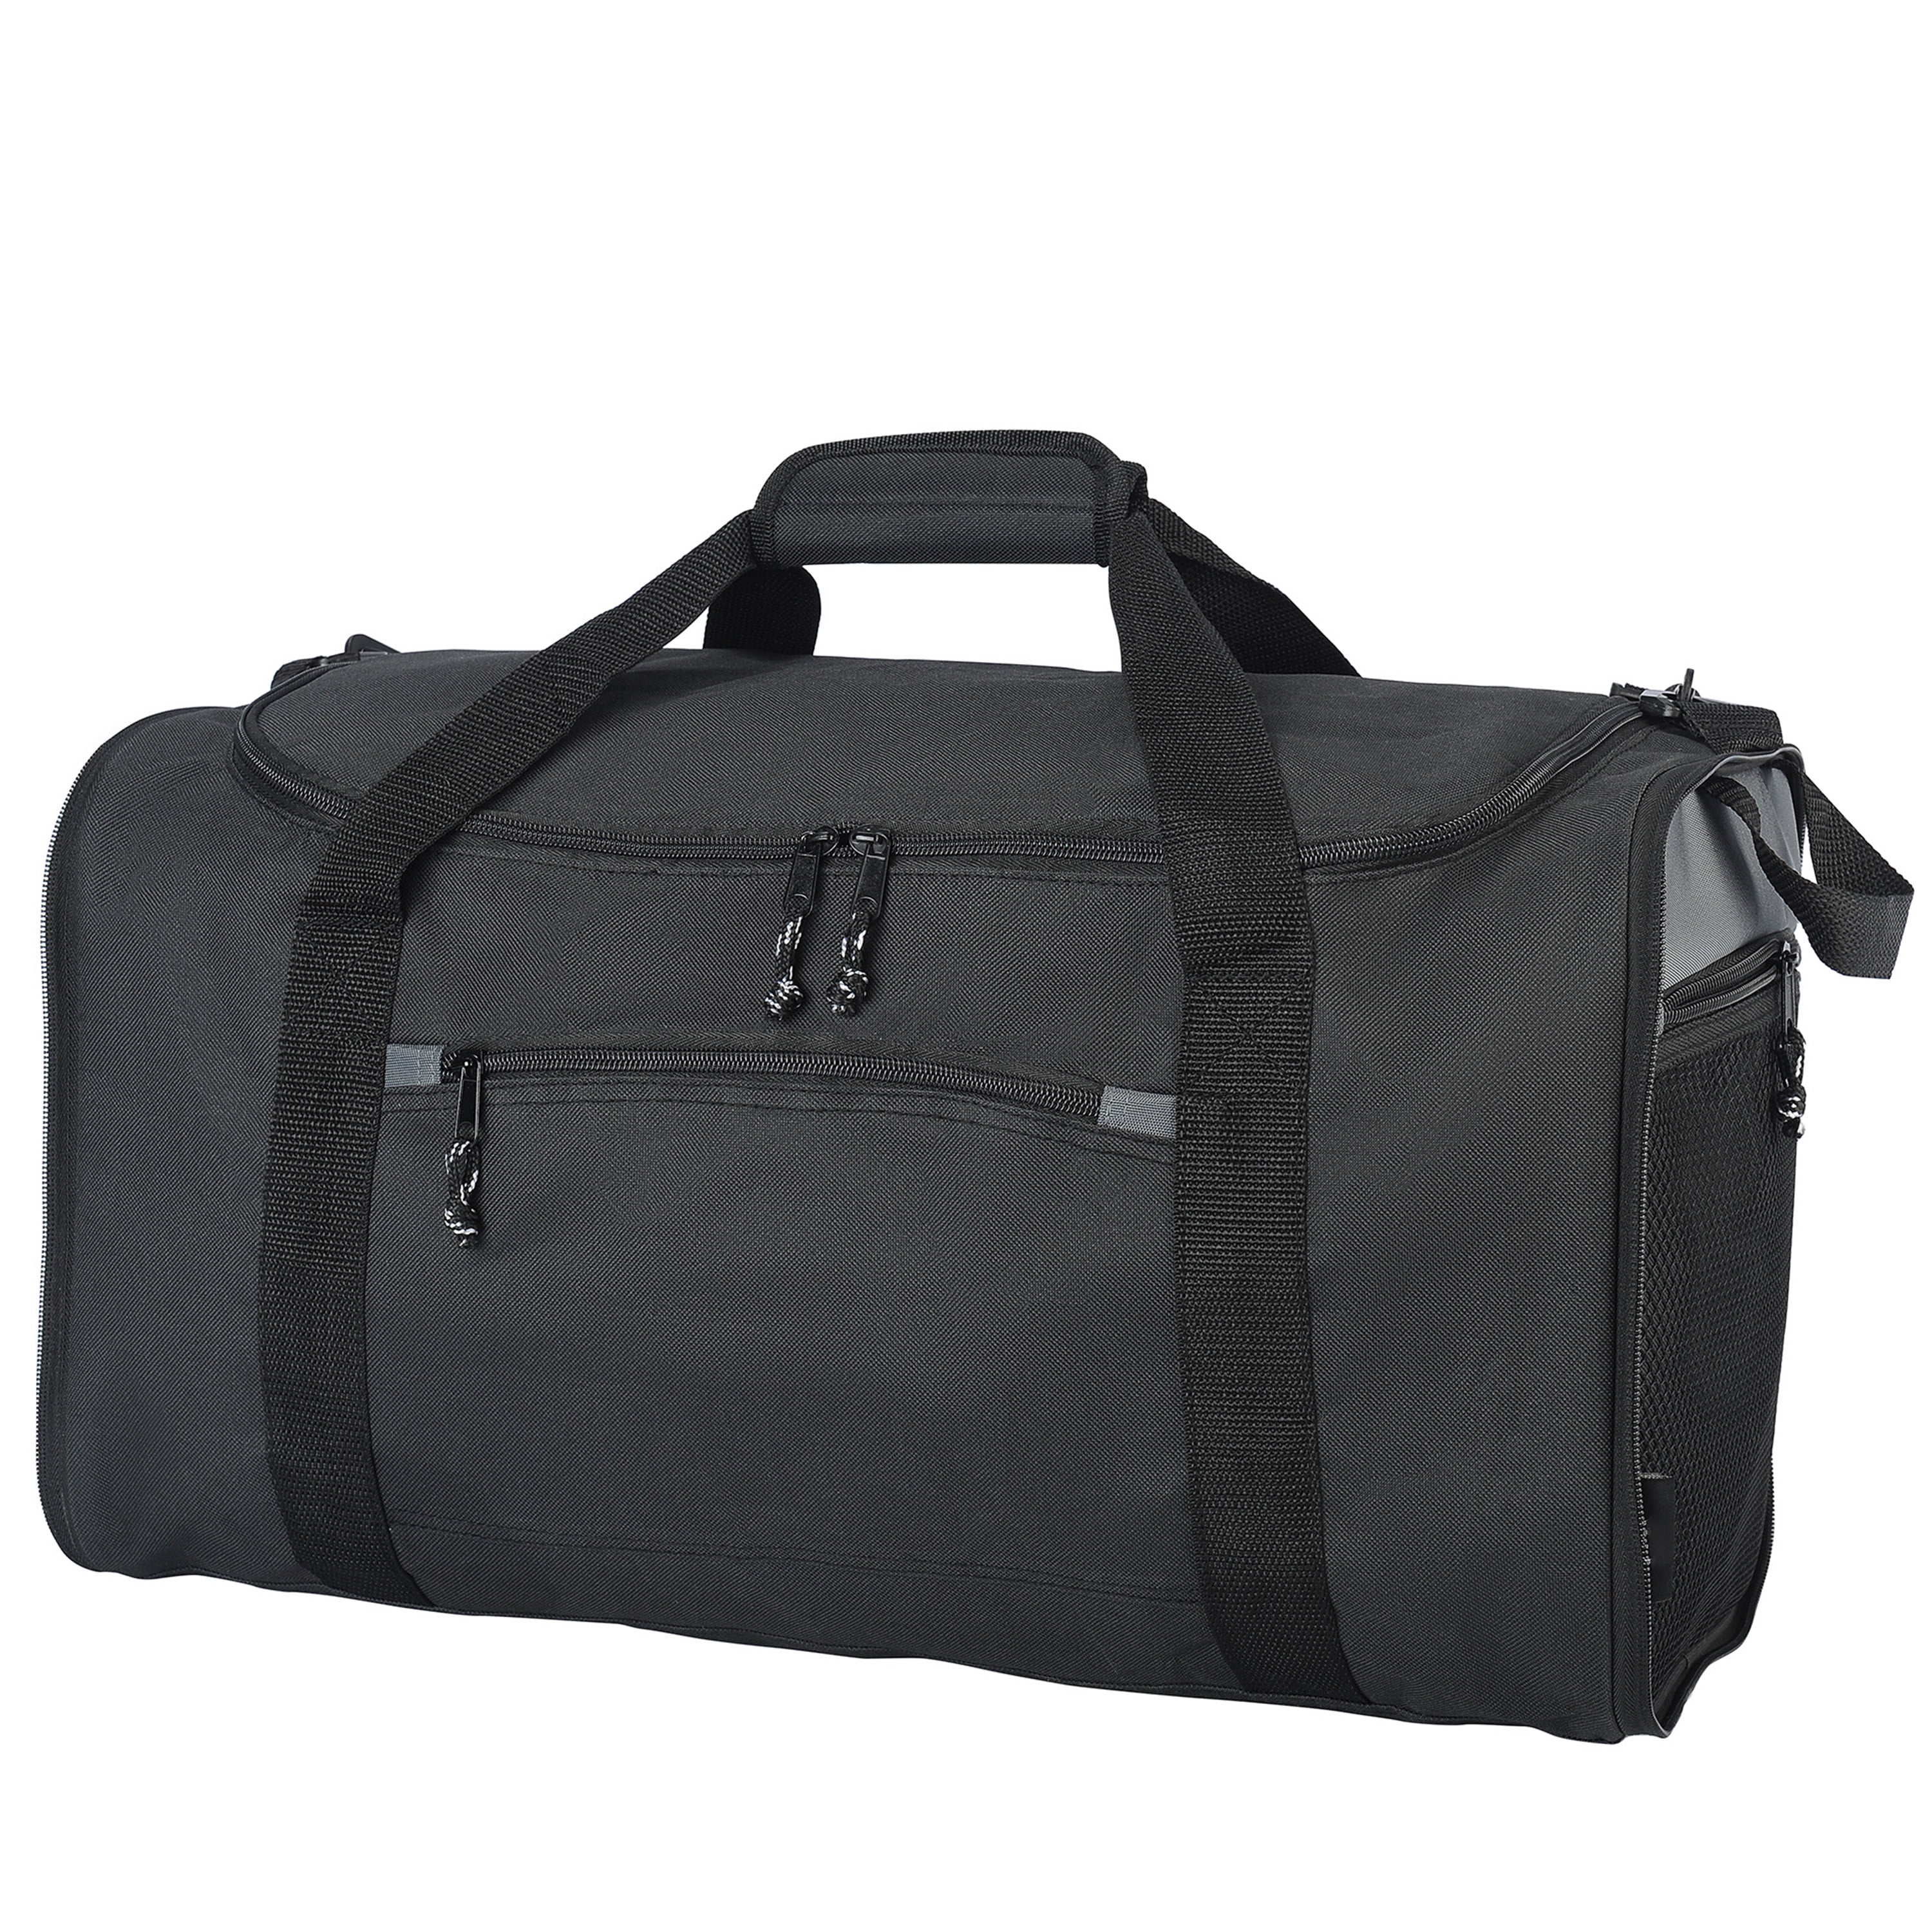 Womens Bags Duffel bags and weekend bags New Balance Duffle Bag in Black 